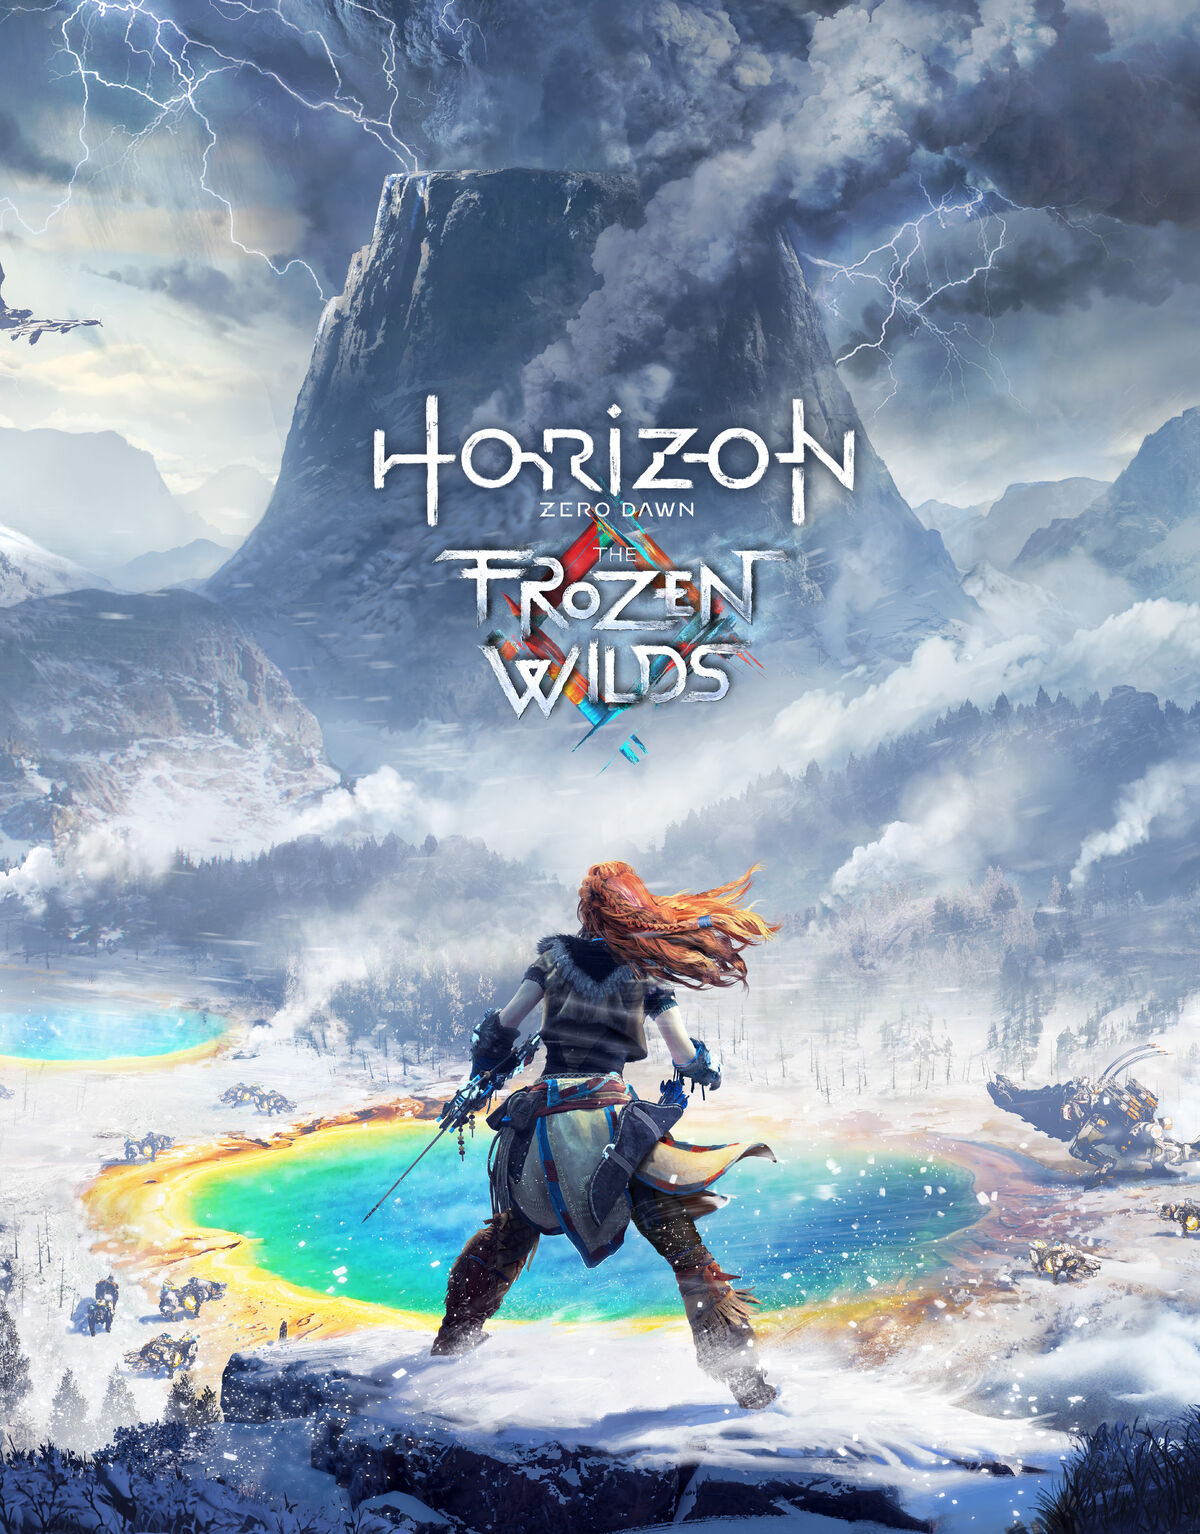 Horizon Zero Dawn tips guide for the Complete Edition